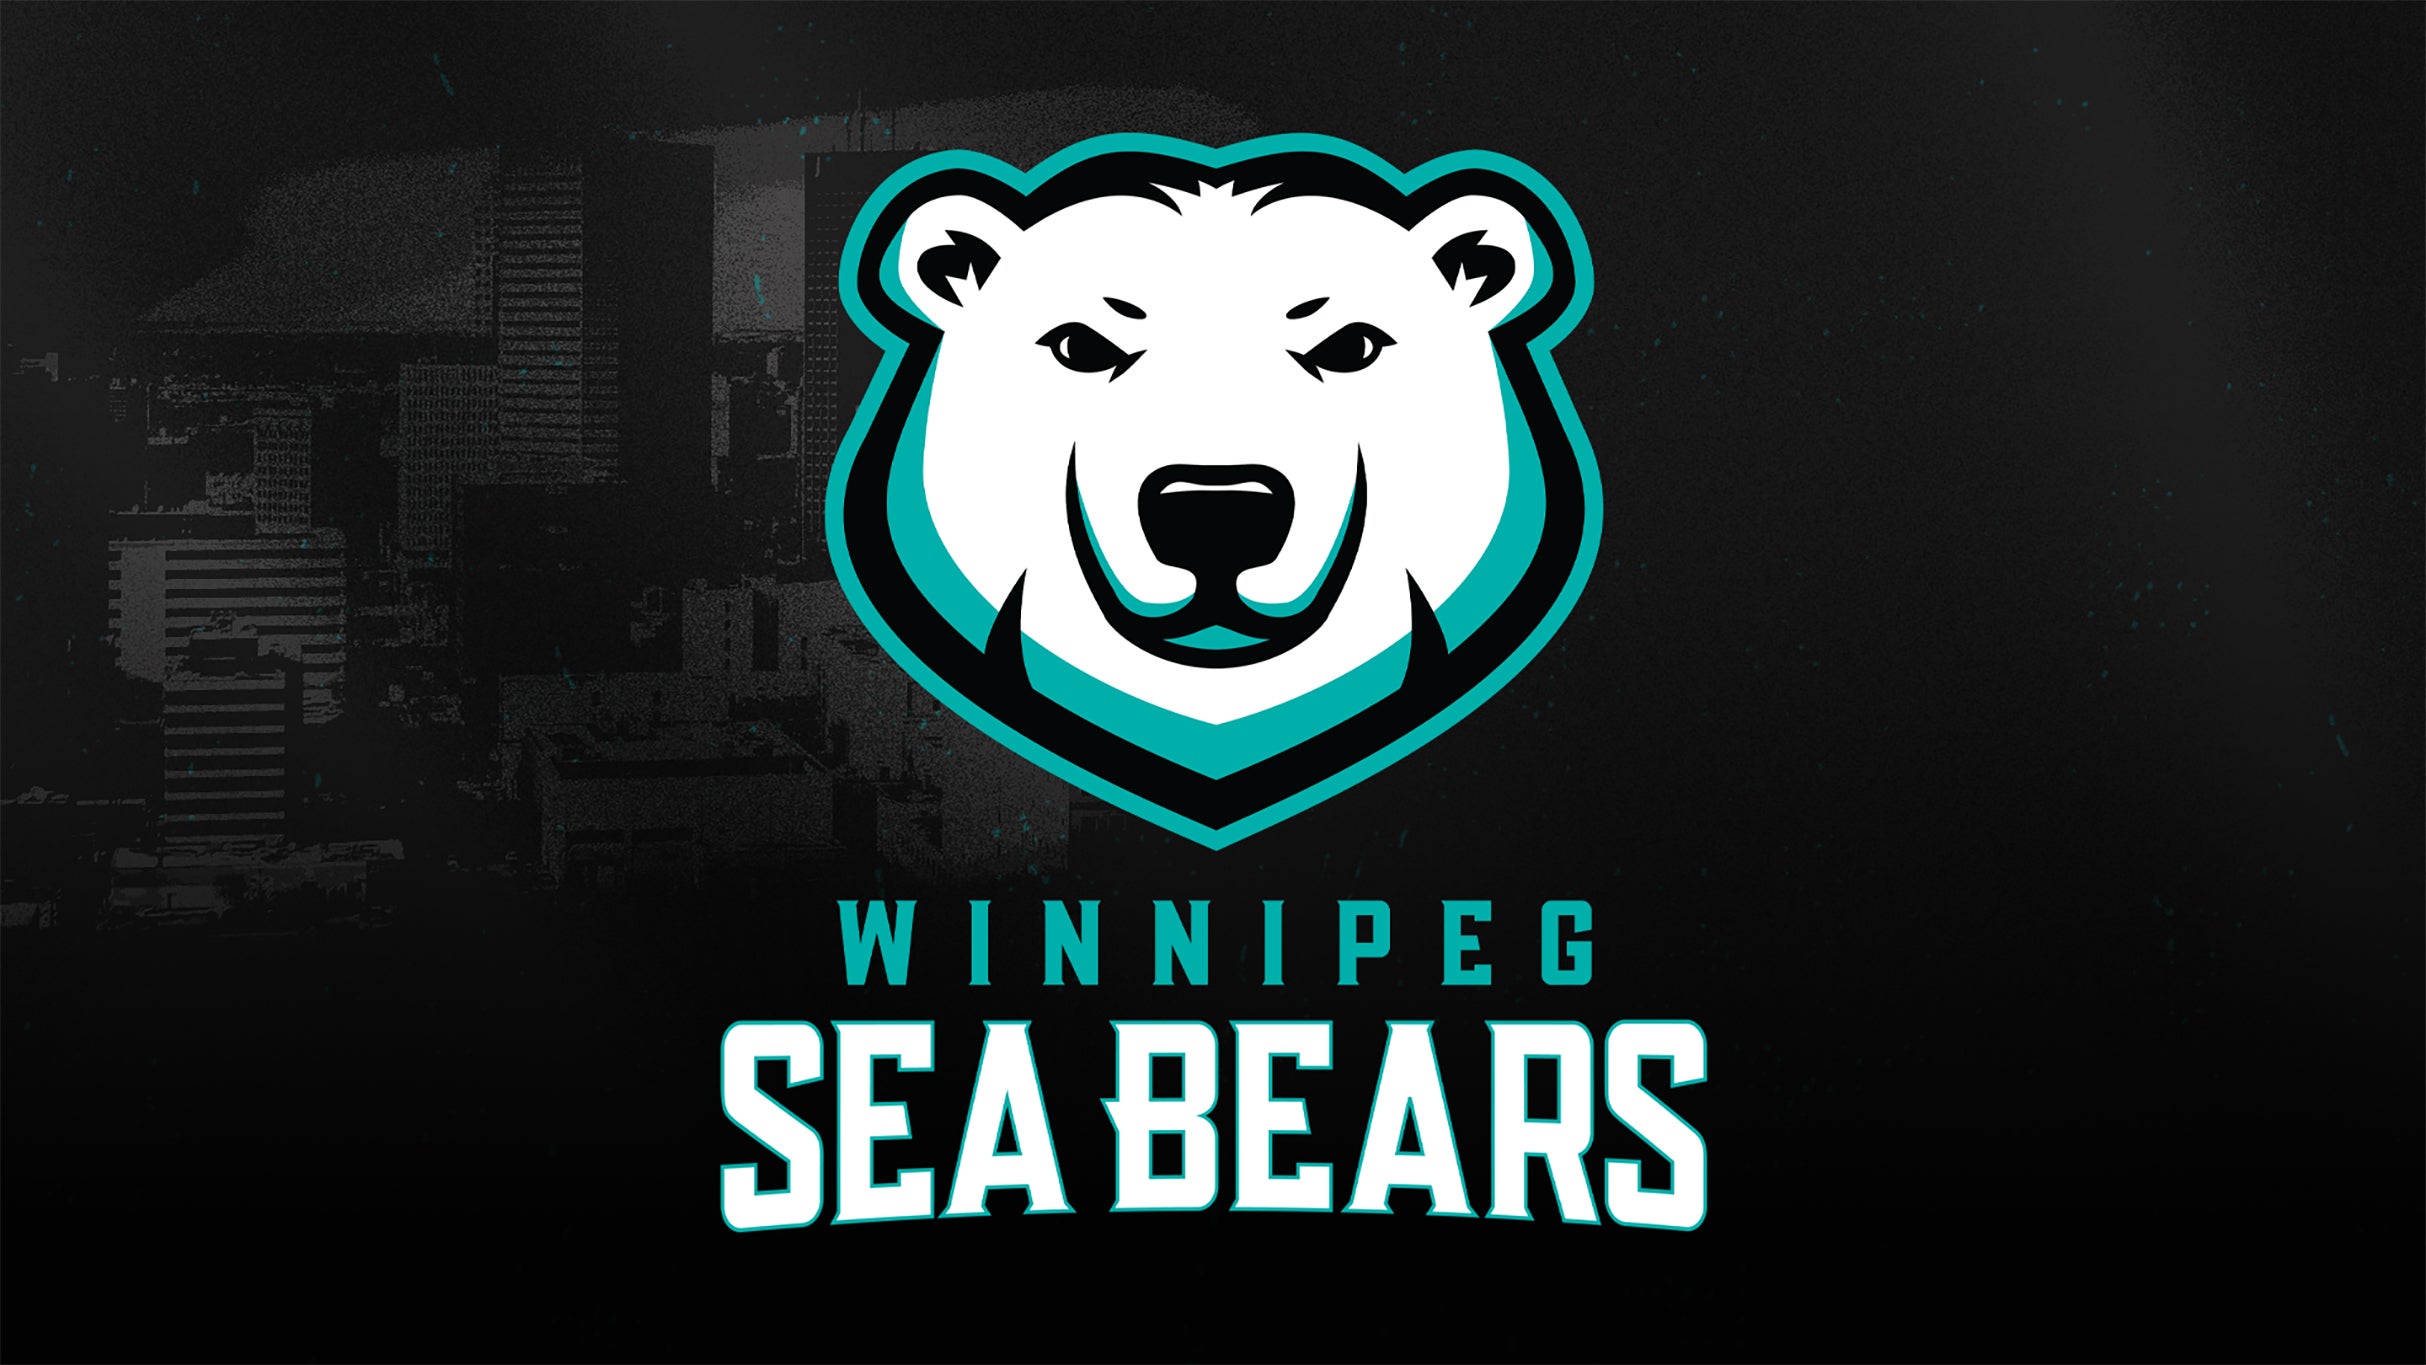 Winnipeg Sea Bears Playoff Game free presale pa55w0rd